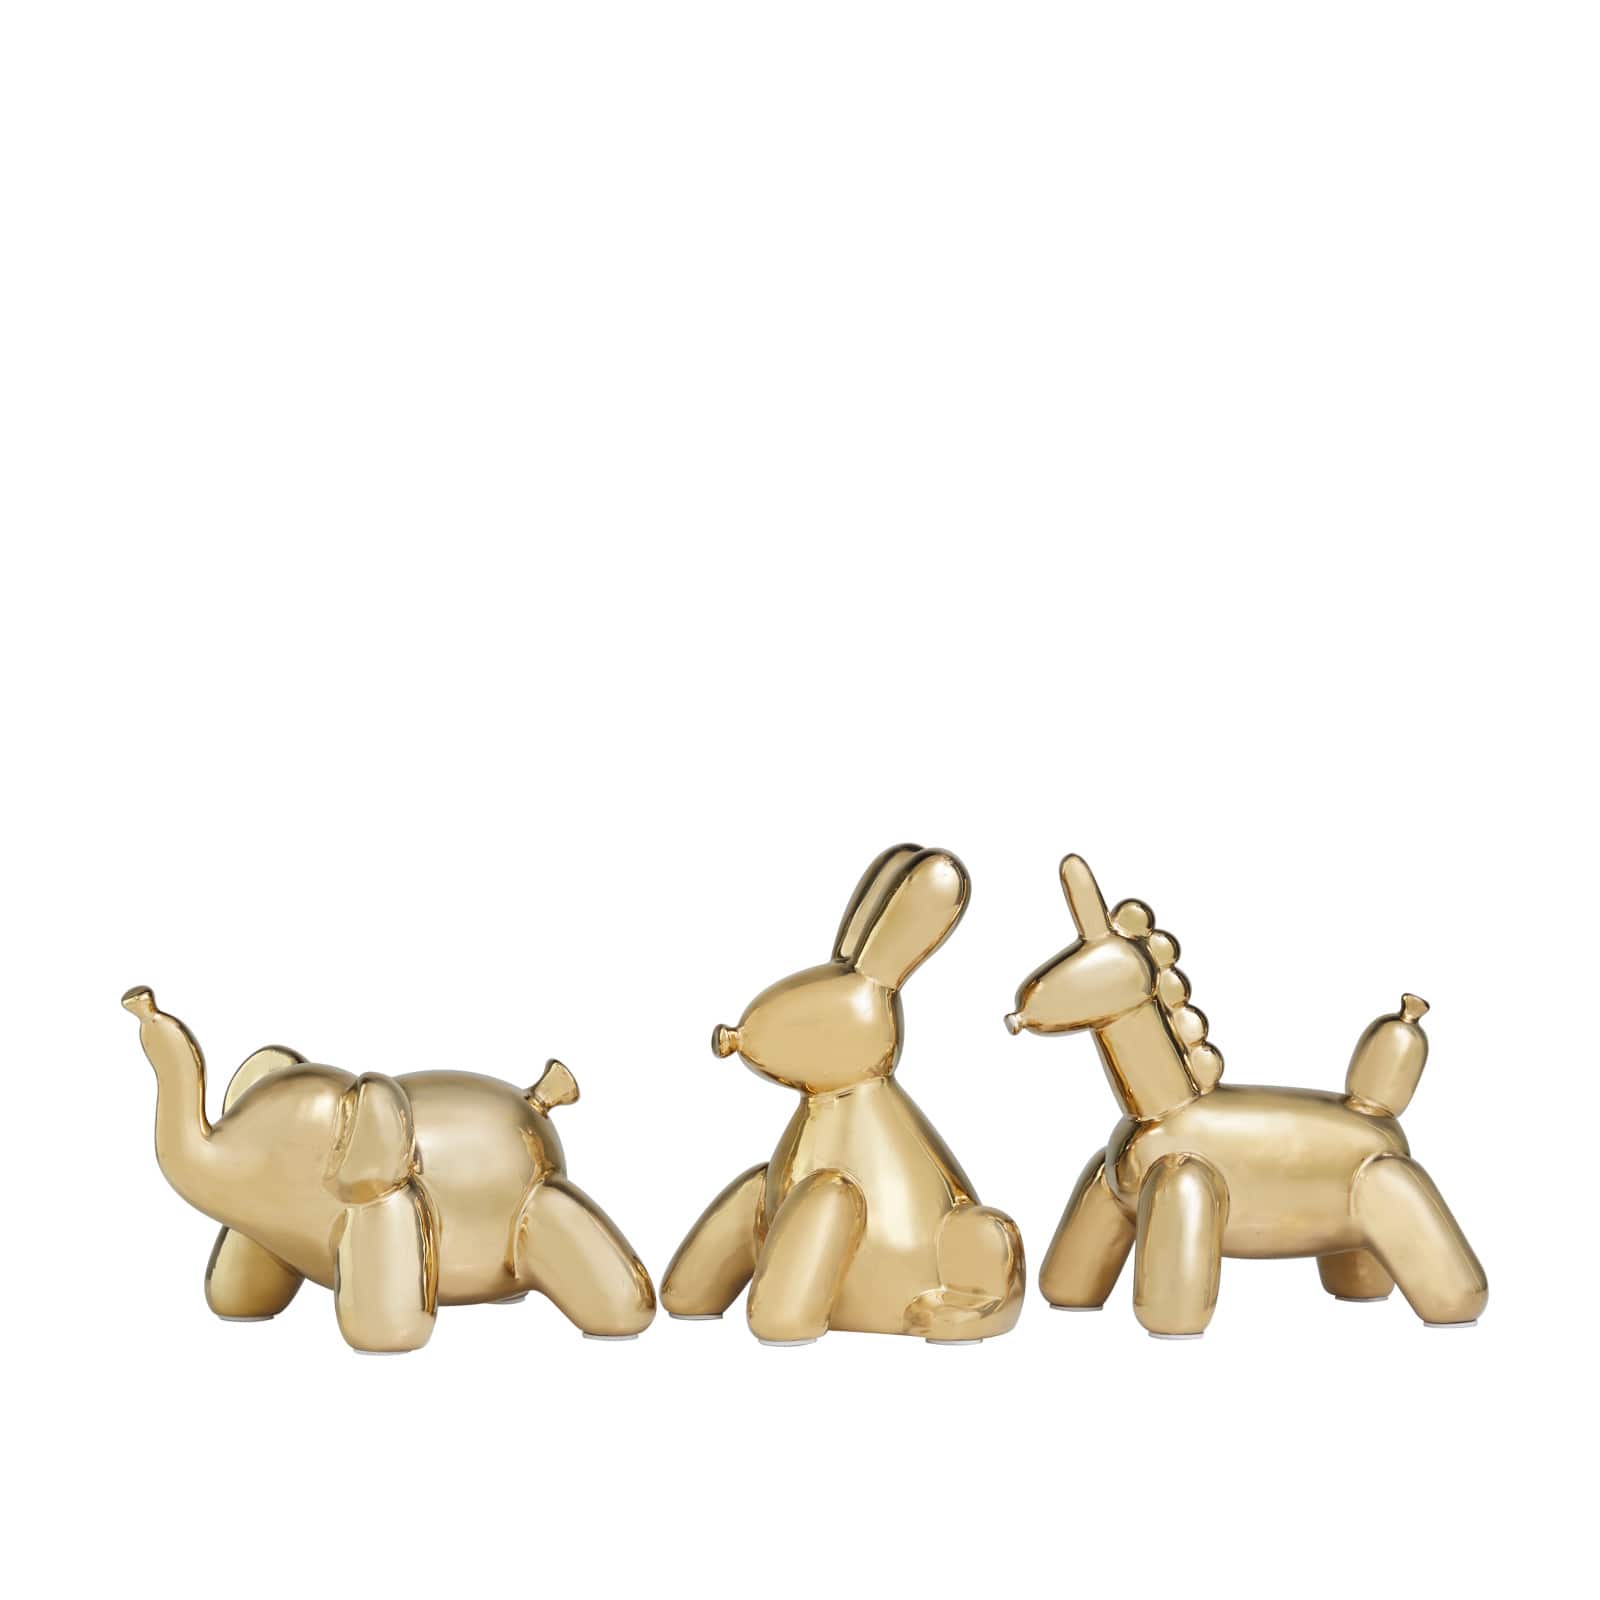 Golden Balloon Animals Ceramic Tabletop Sculpture Set